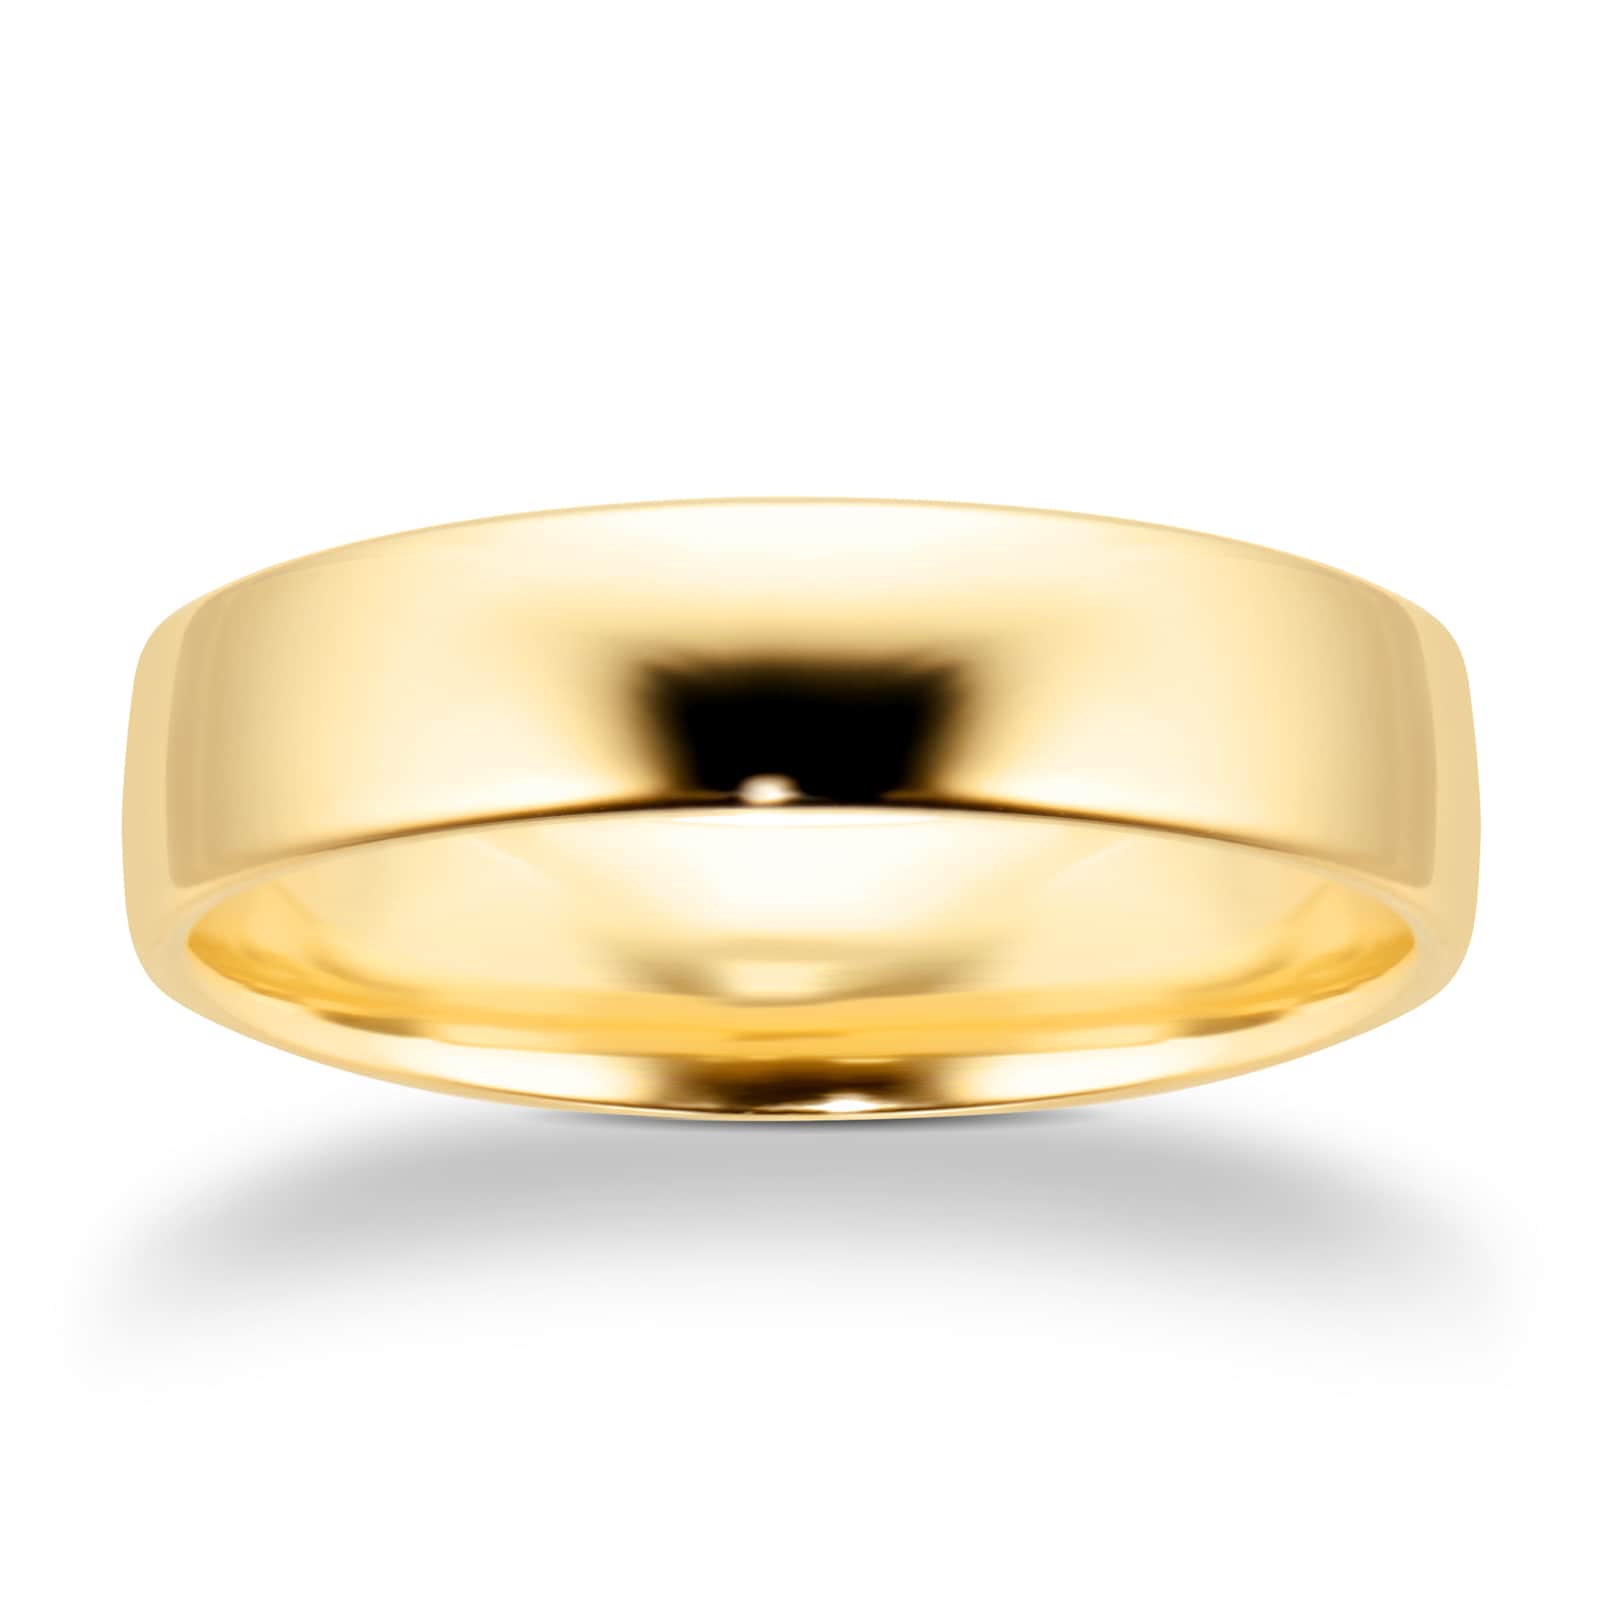 5mm Slight Court Standard Wedding Ring In 18 Carat Yellow Gold - Ring Size N